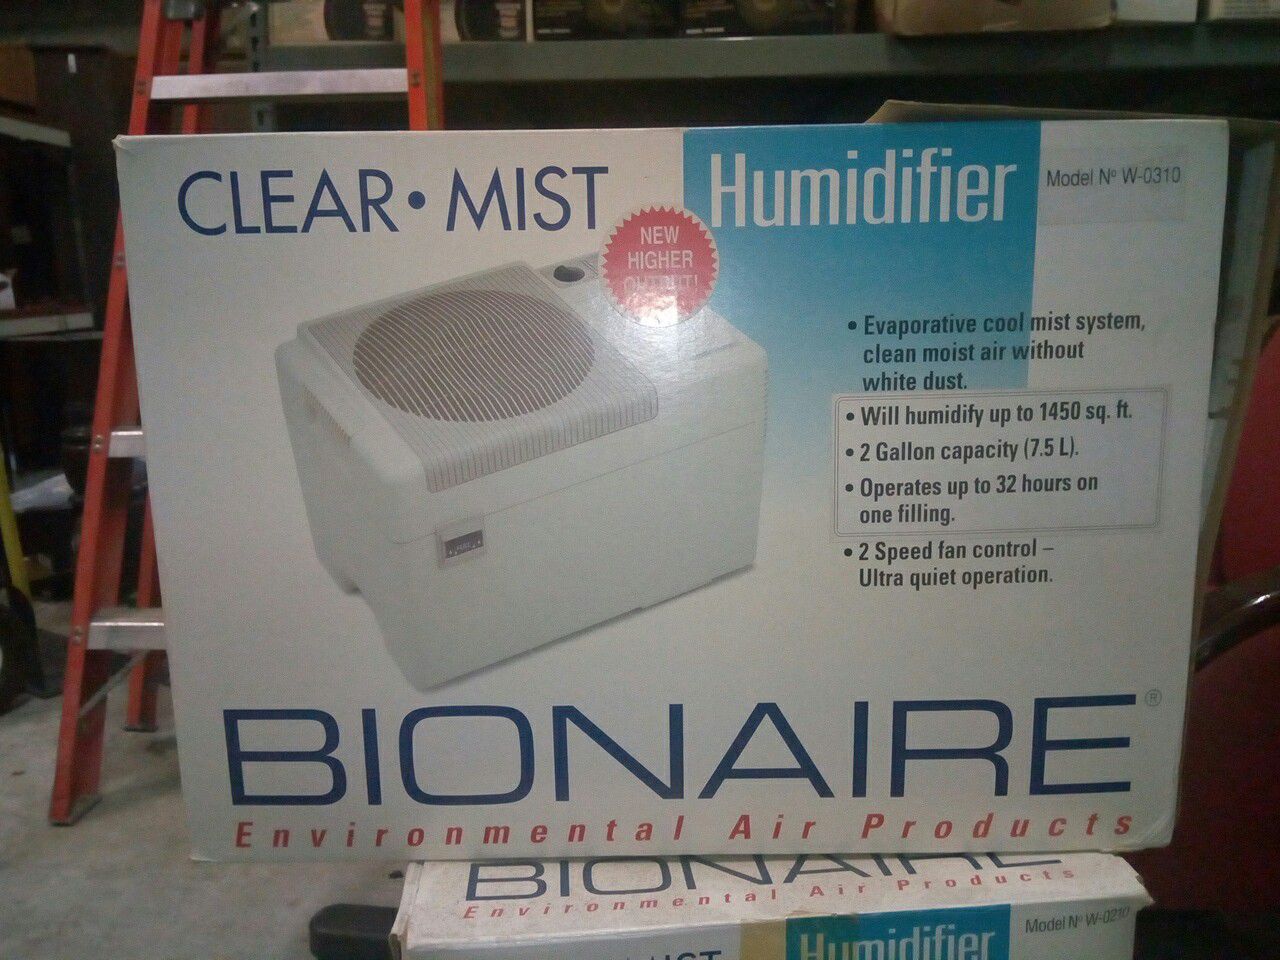 New Bionaire humidifier